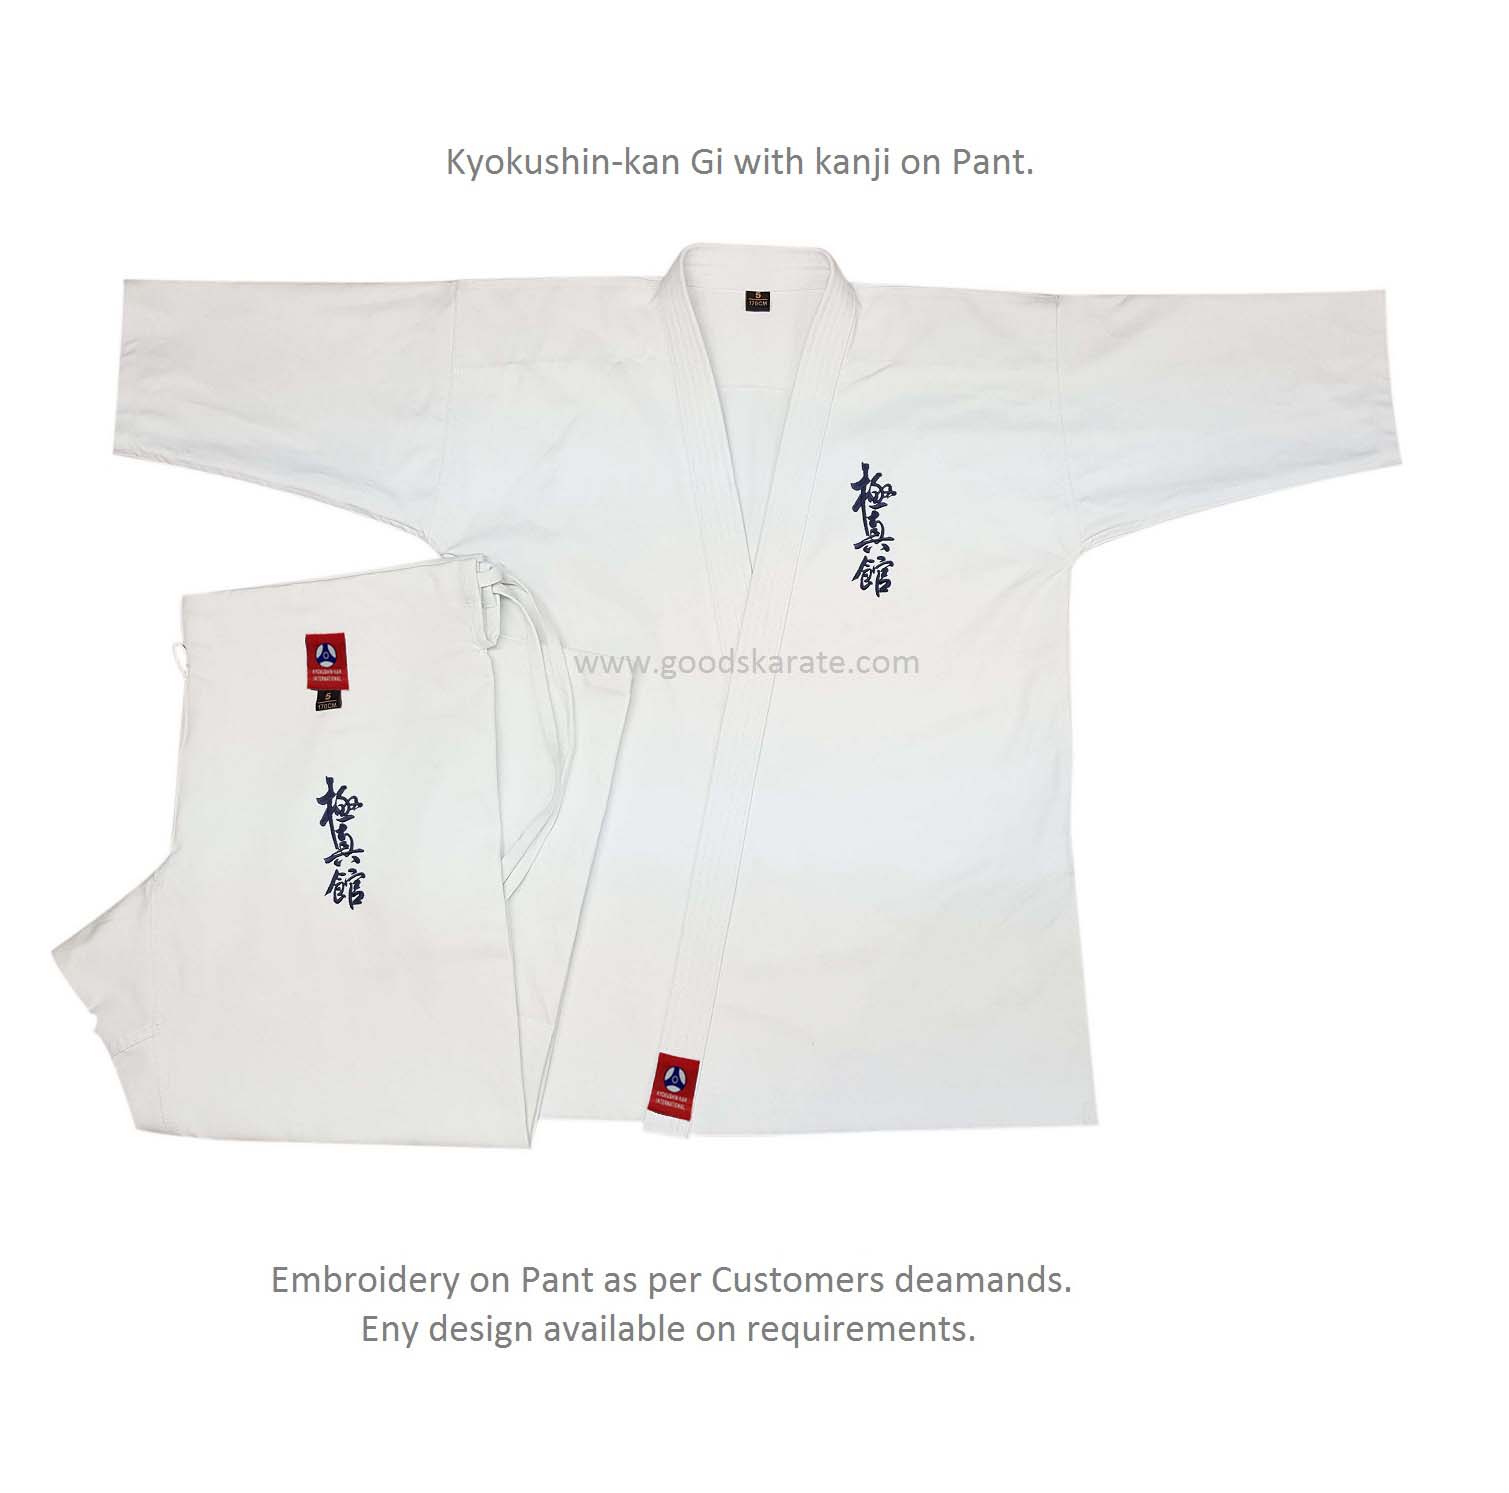 Kyokushin-kan Gi with kanji pant